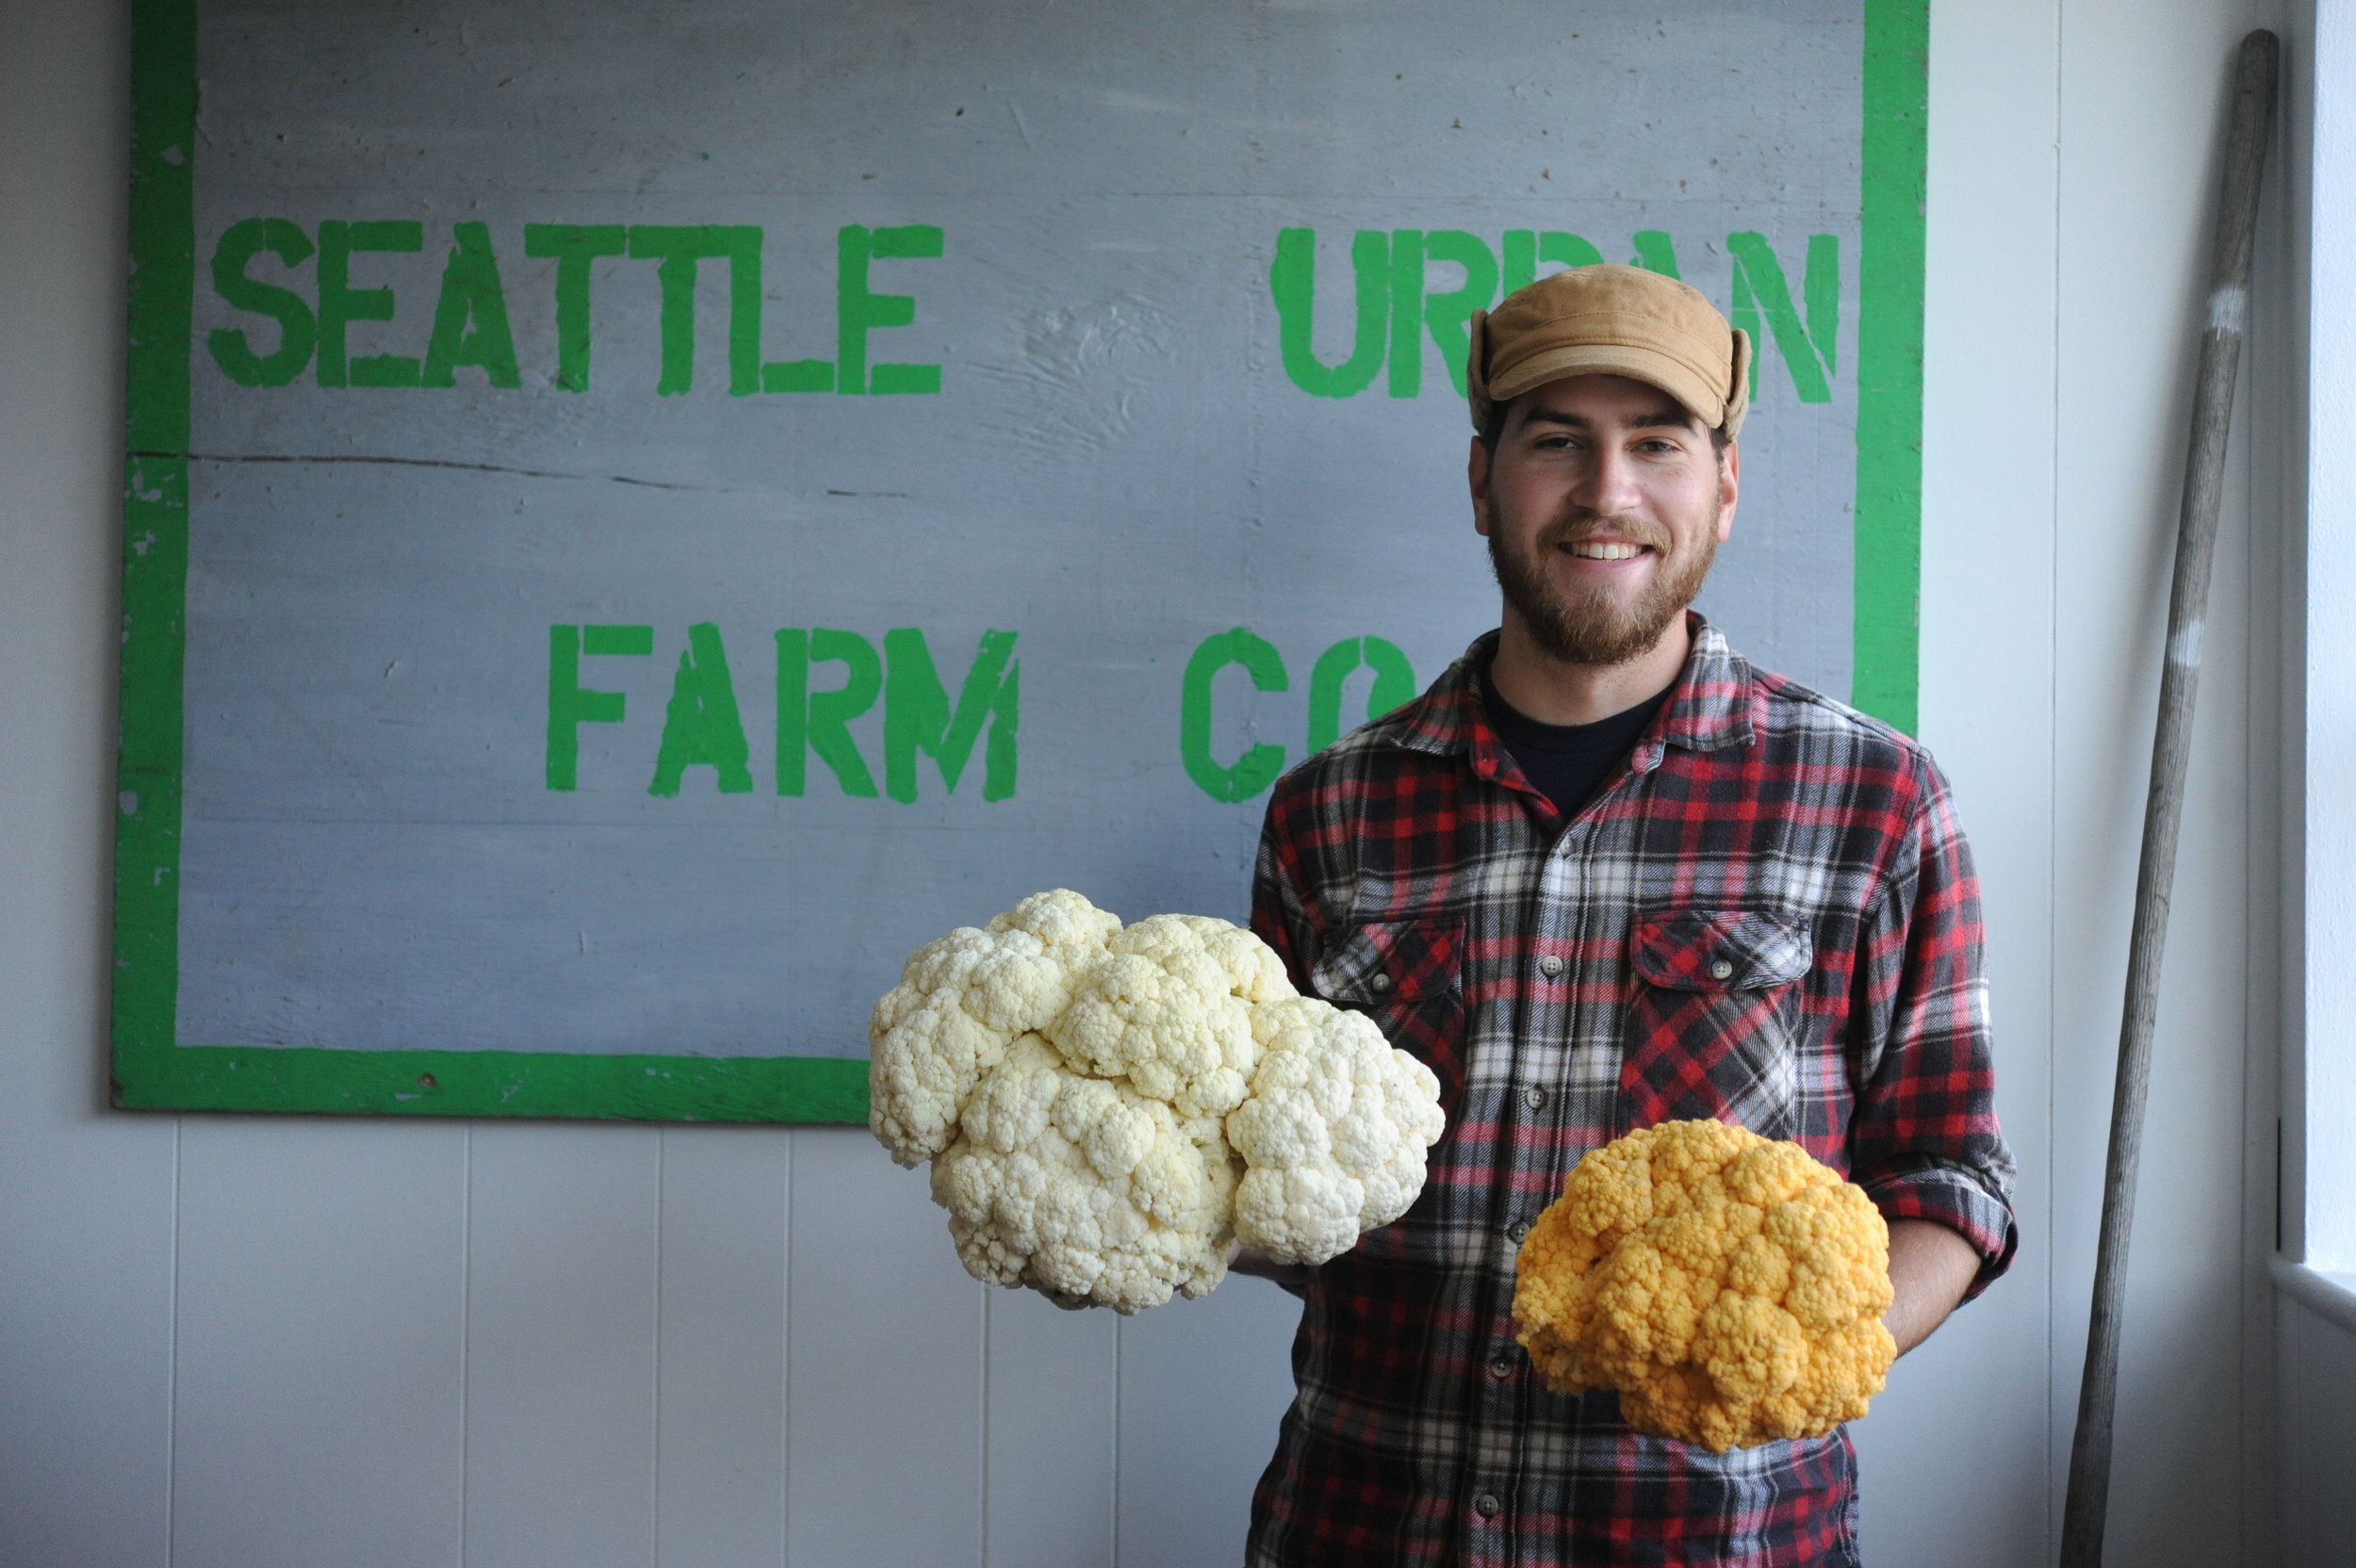 Giant cauliflower heads